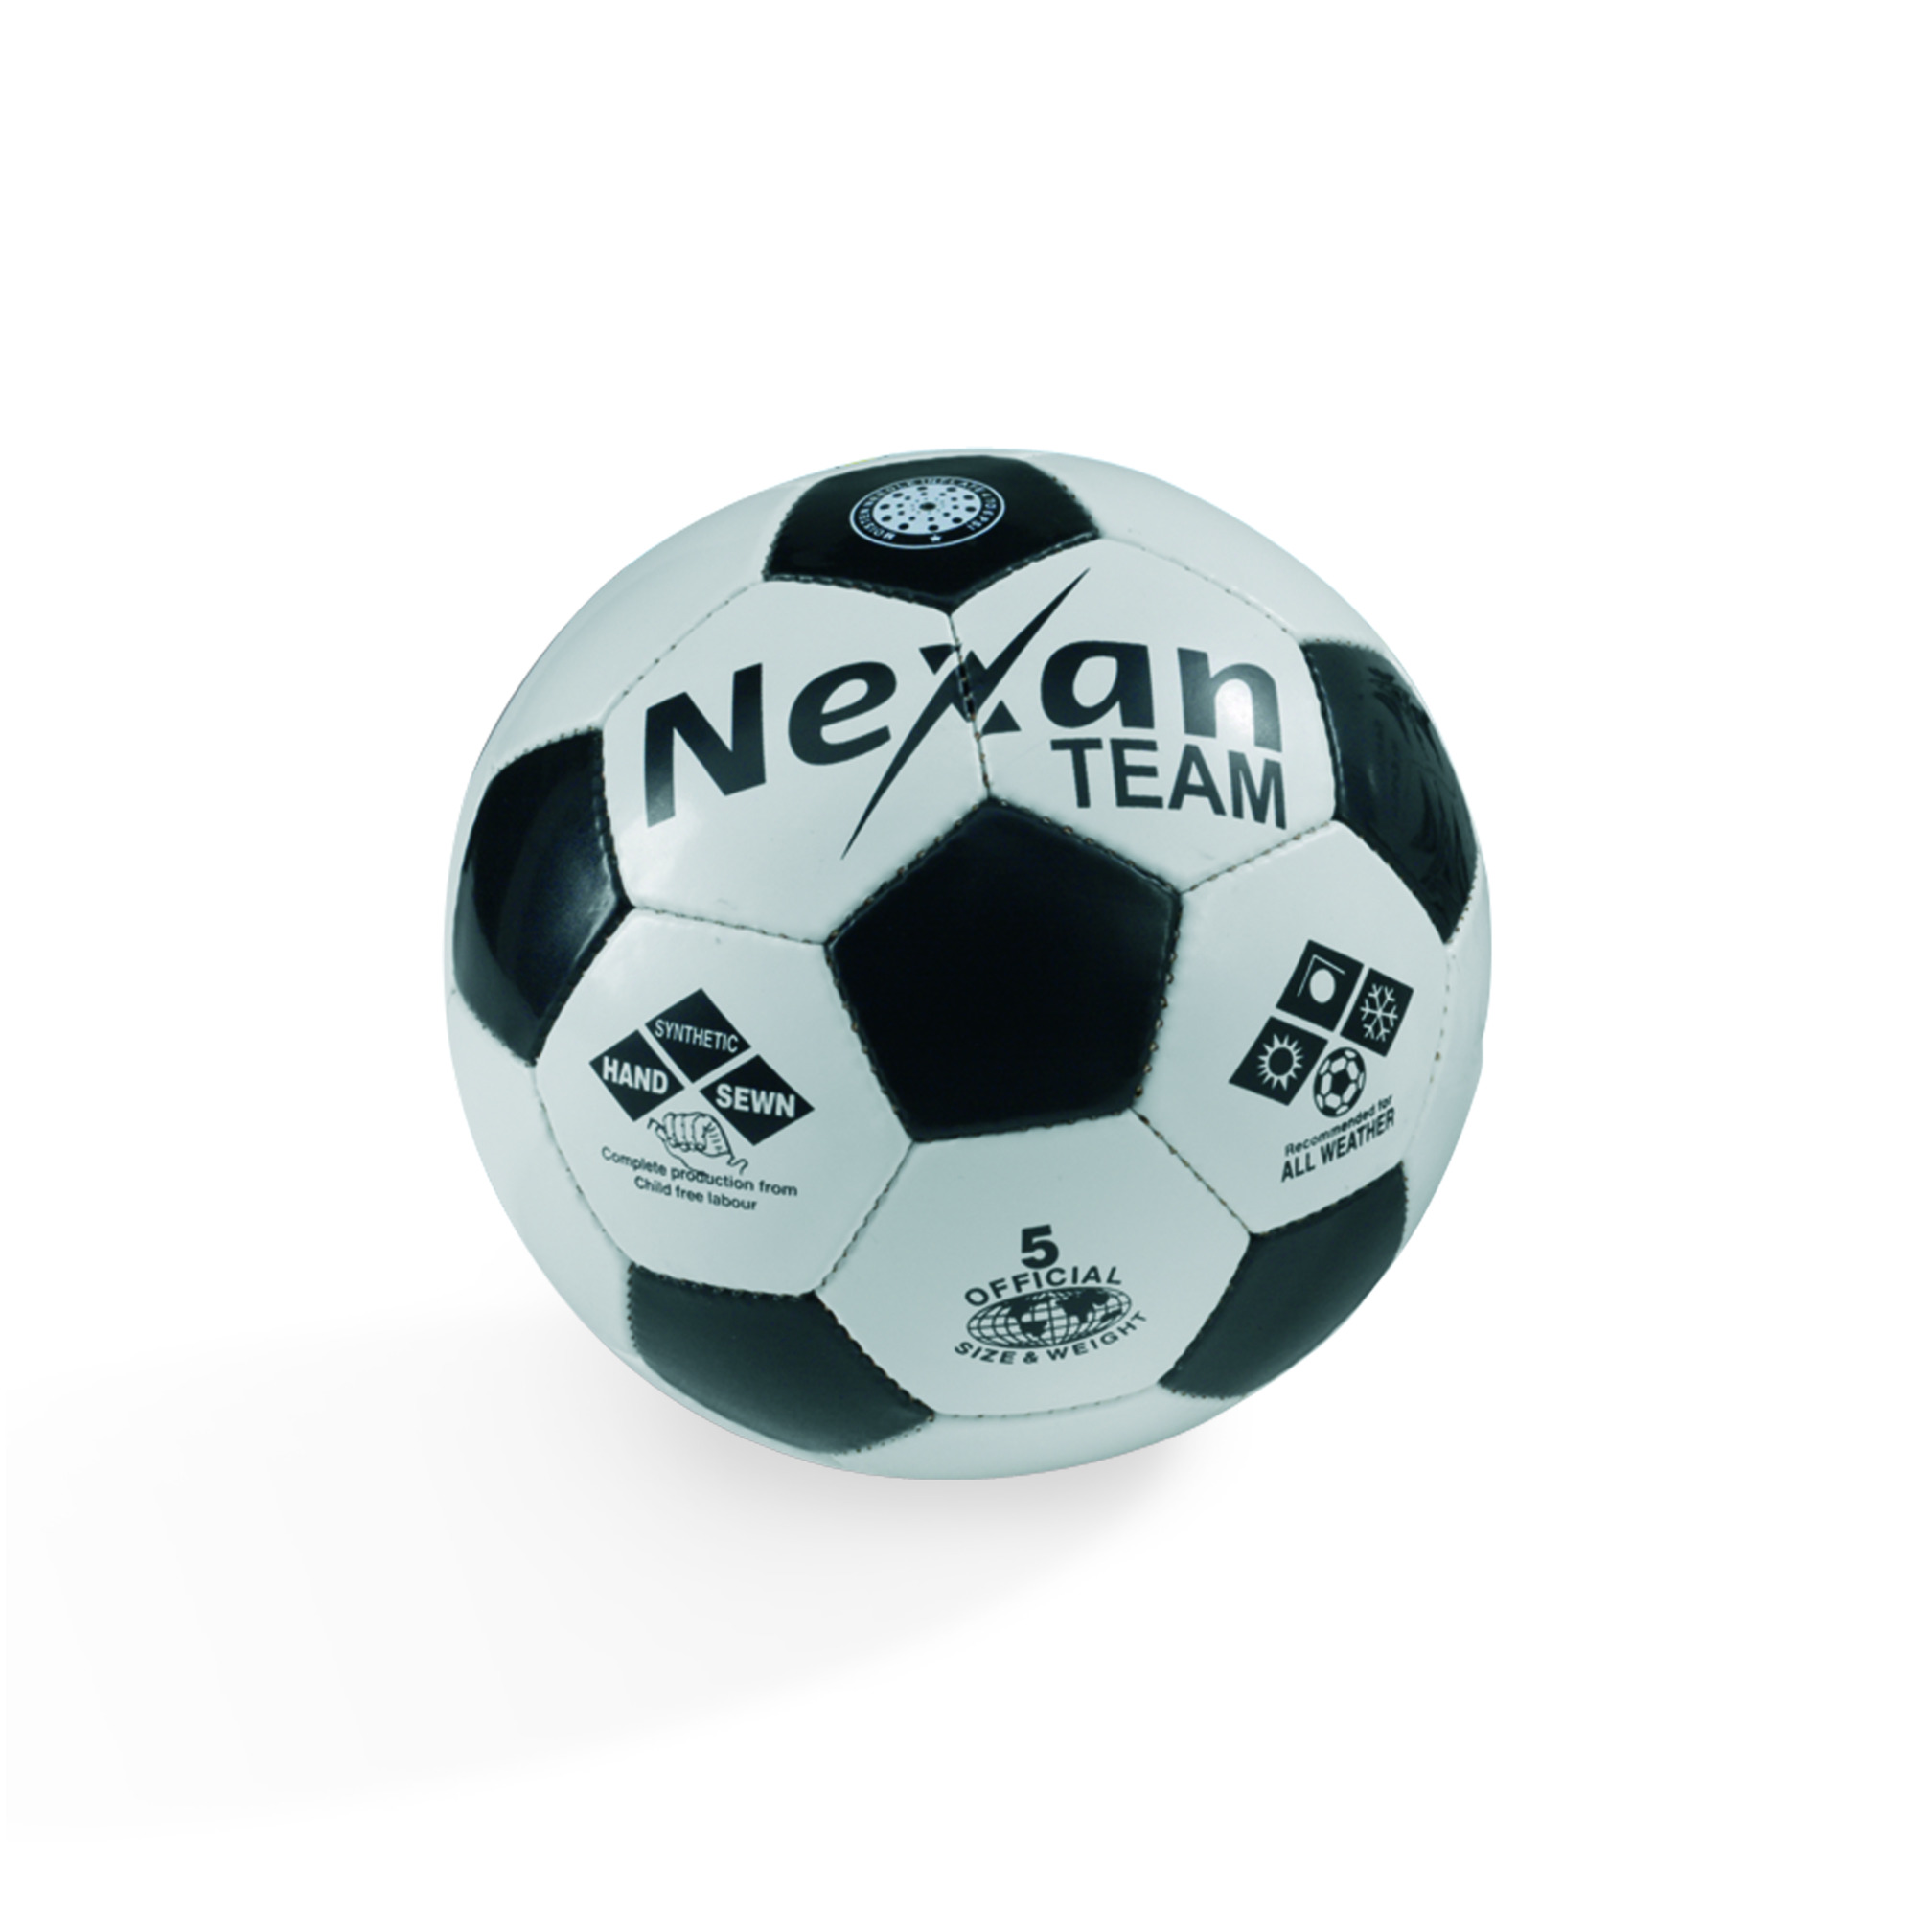 Football Nexan Team, size 5